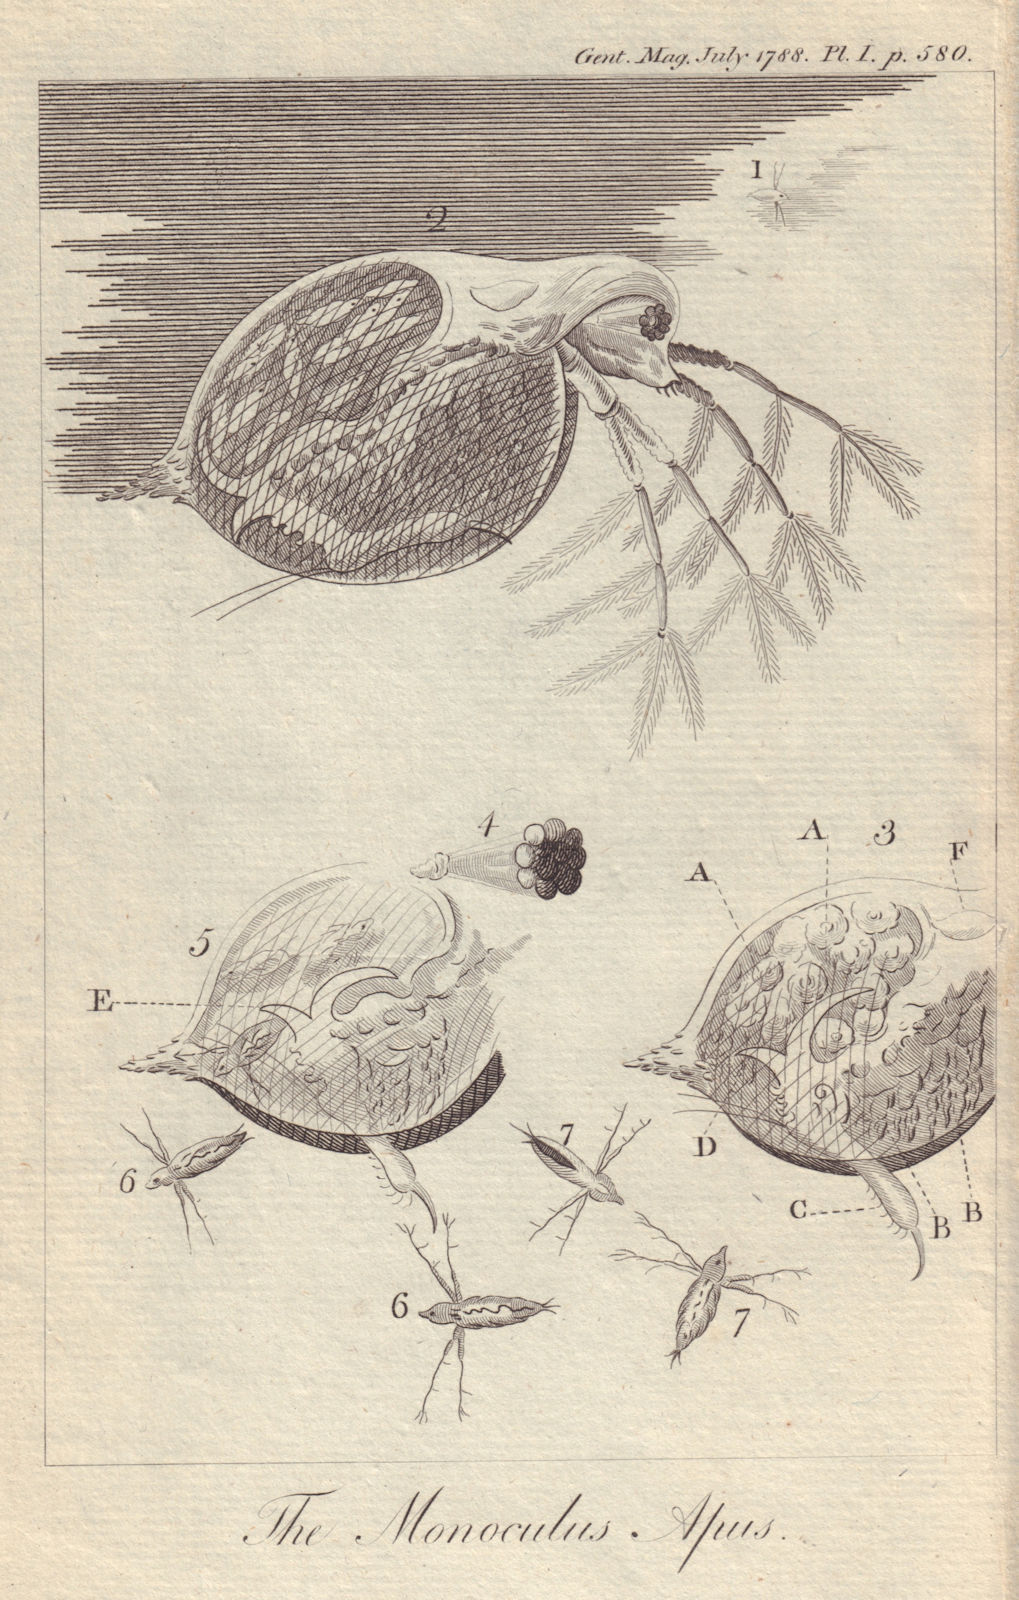 Associate Product Monoculus Apus. Lepidurus apus. Tadpole Shrimp. GENTS MAG 1788 old print